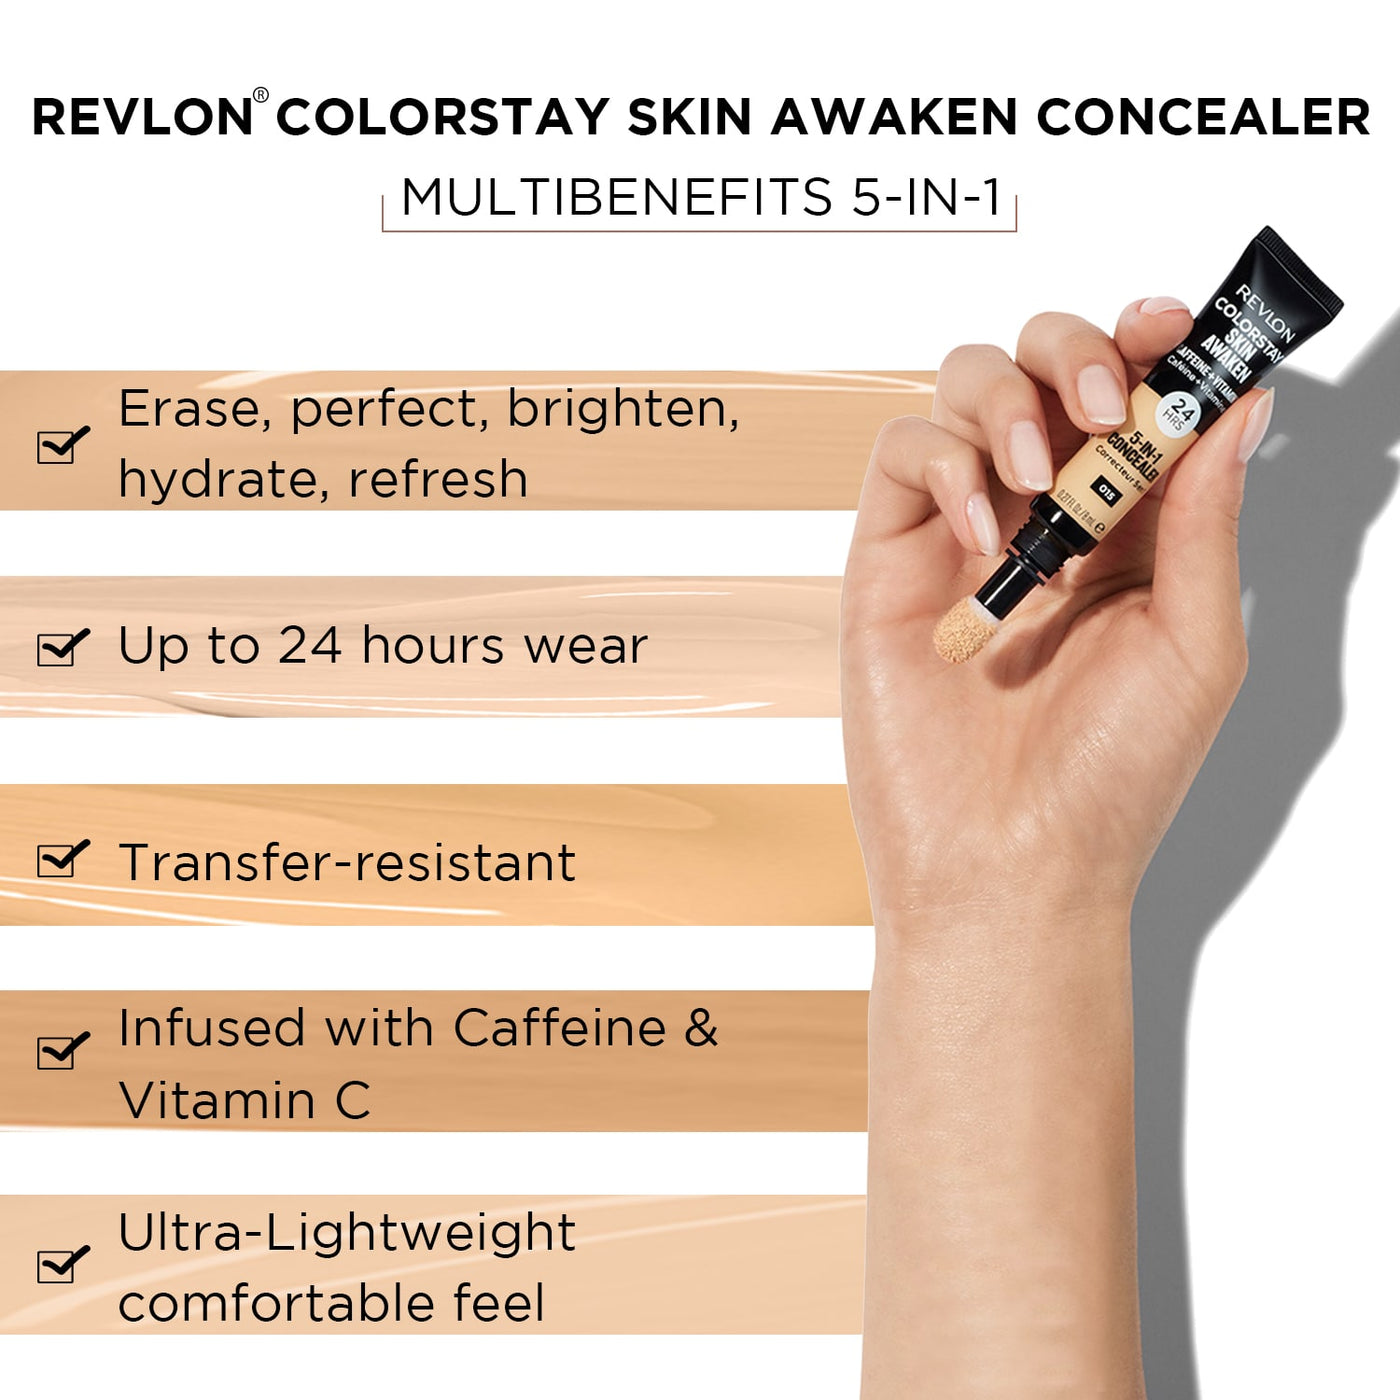 Revlon ColorStay Skin Awaken 5-in-1 Concealer 8ml - Fair Shade